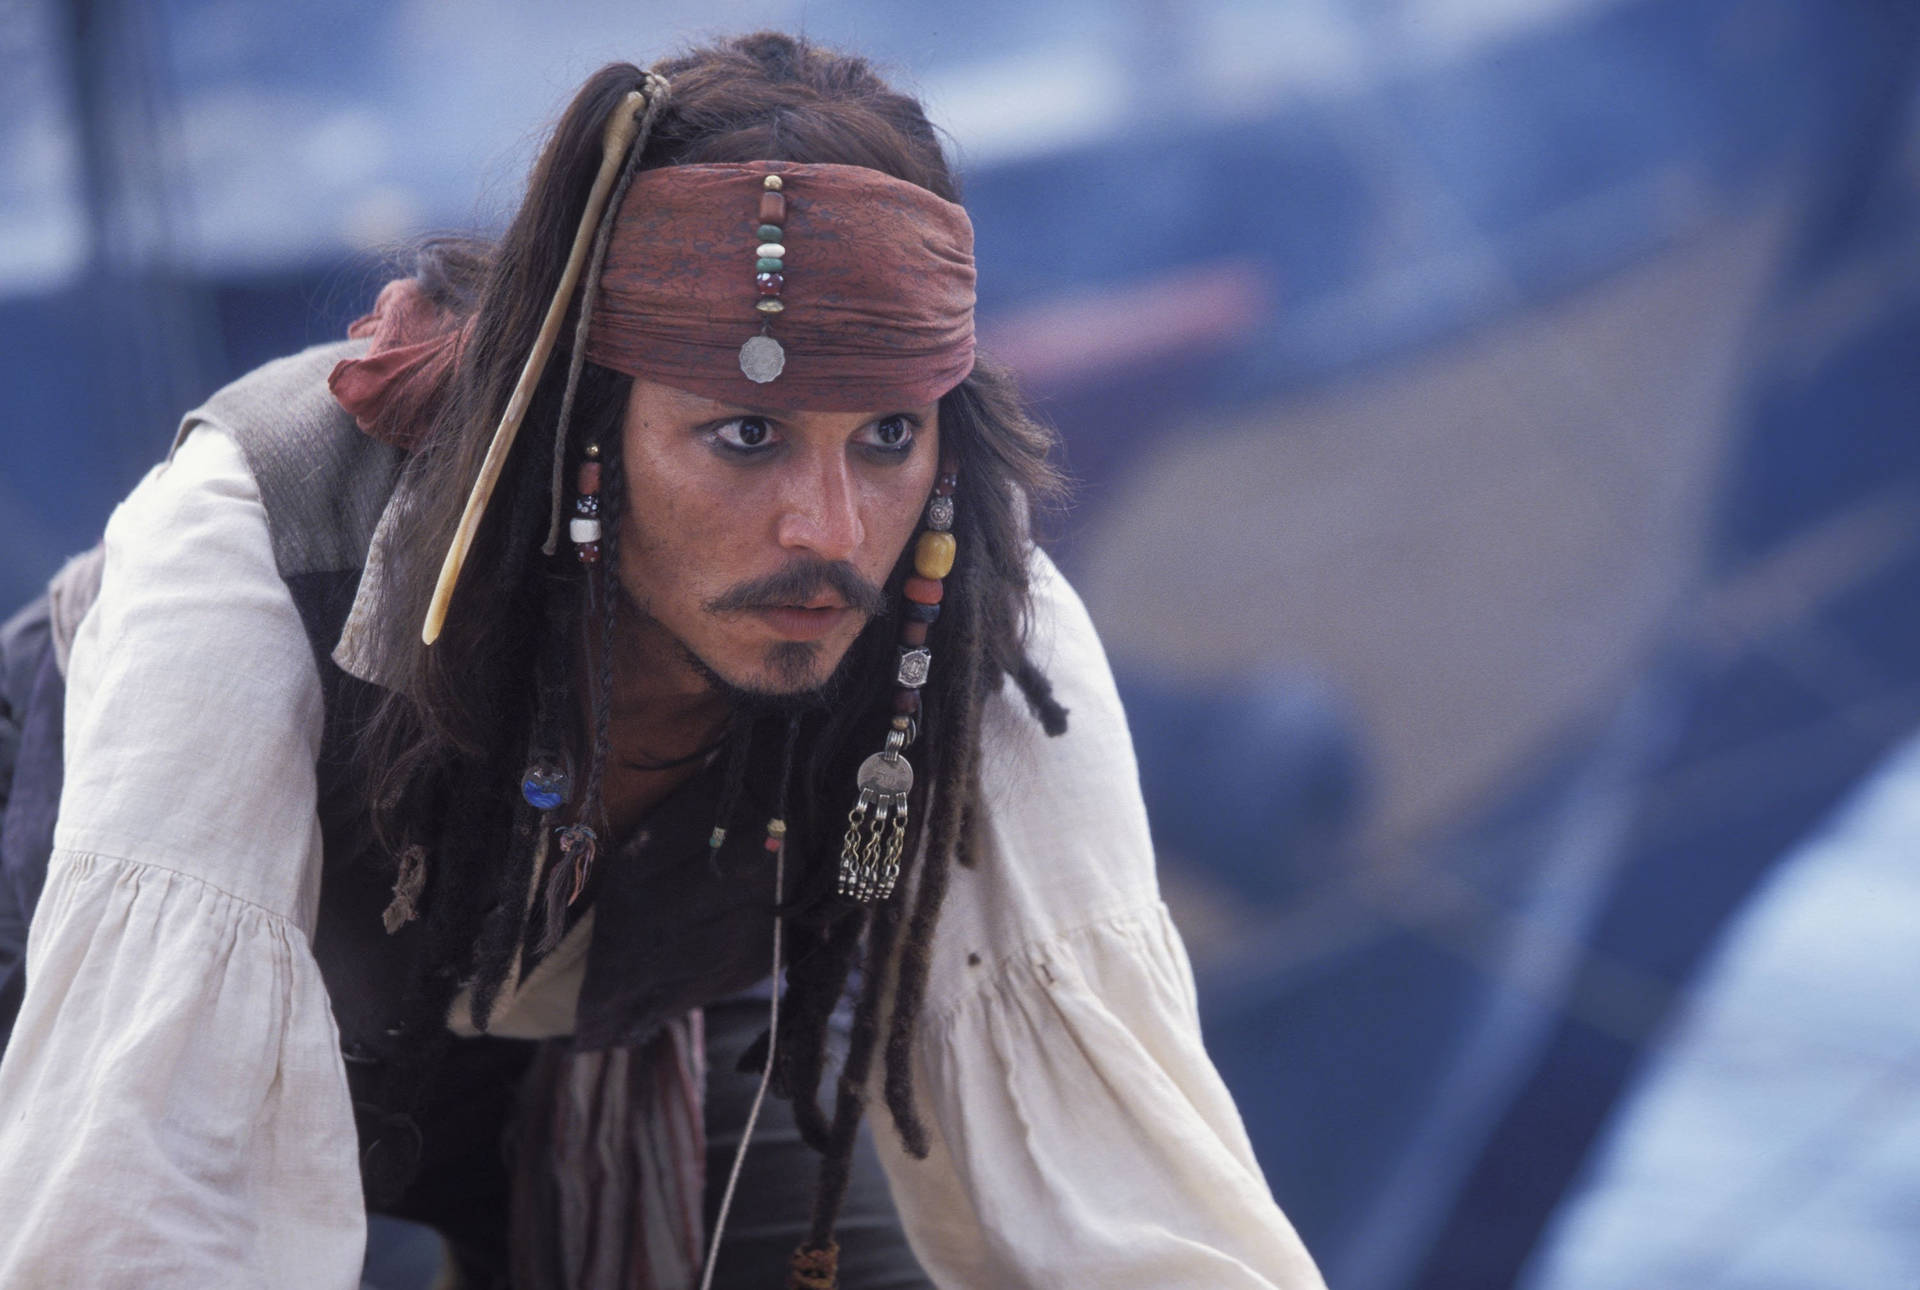 Pirate Jack Sparrow